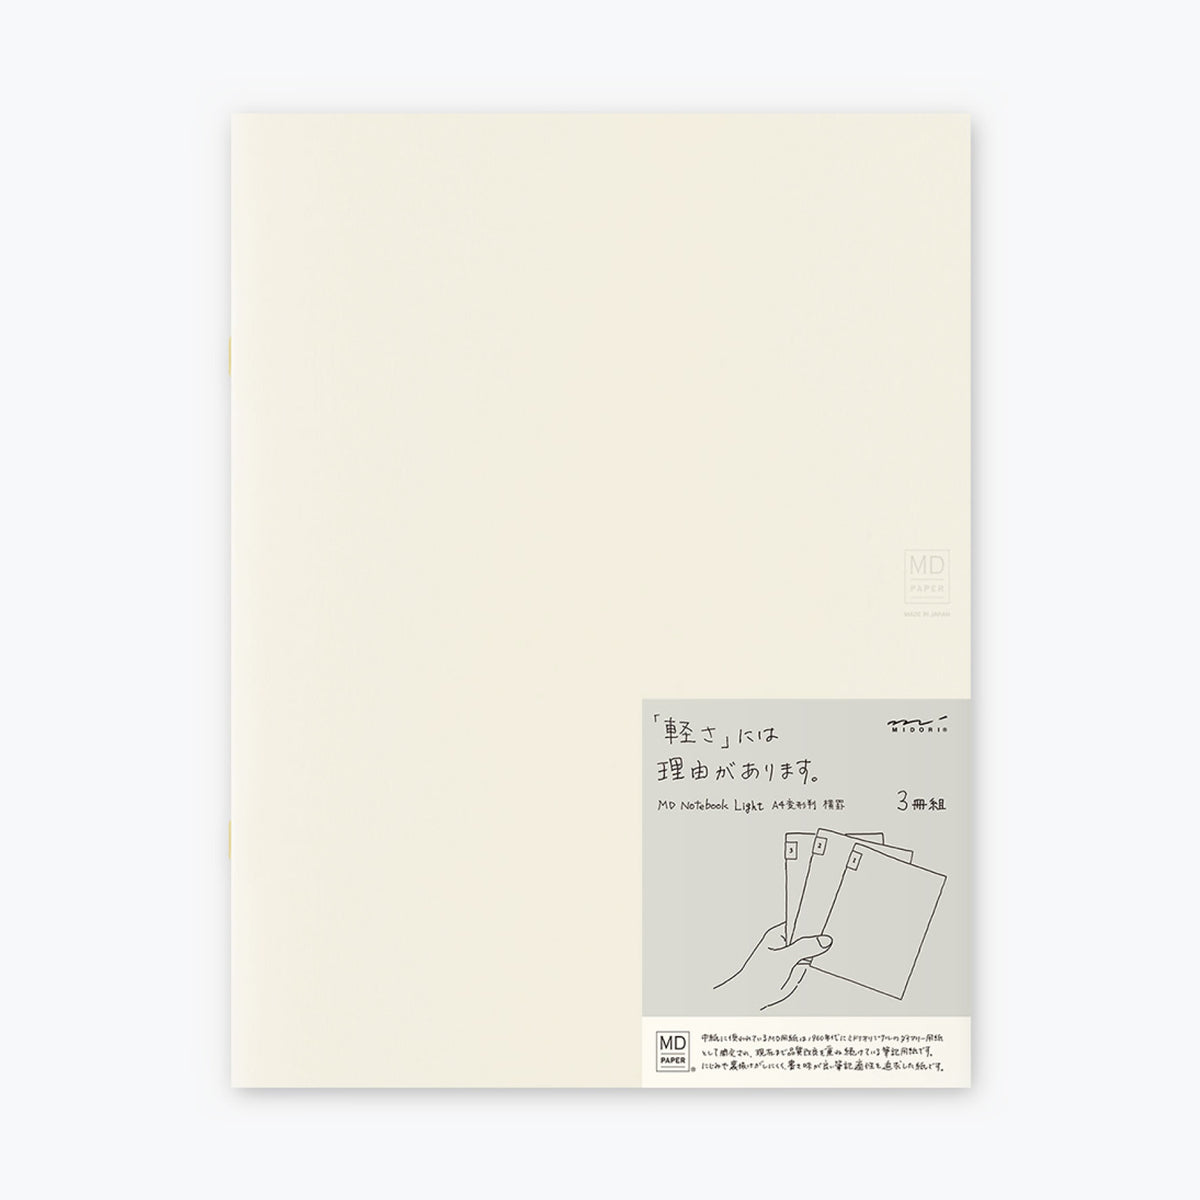 Midori - Notebook - MD Paper - Light - A4 - Lined